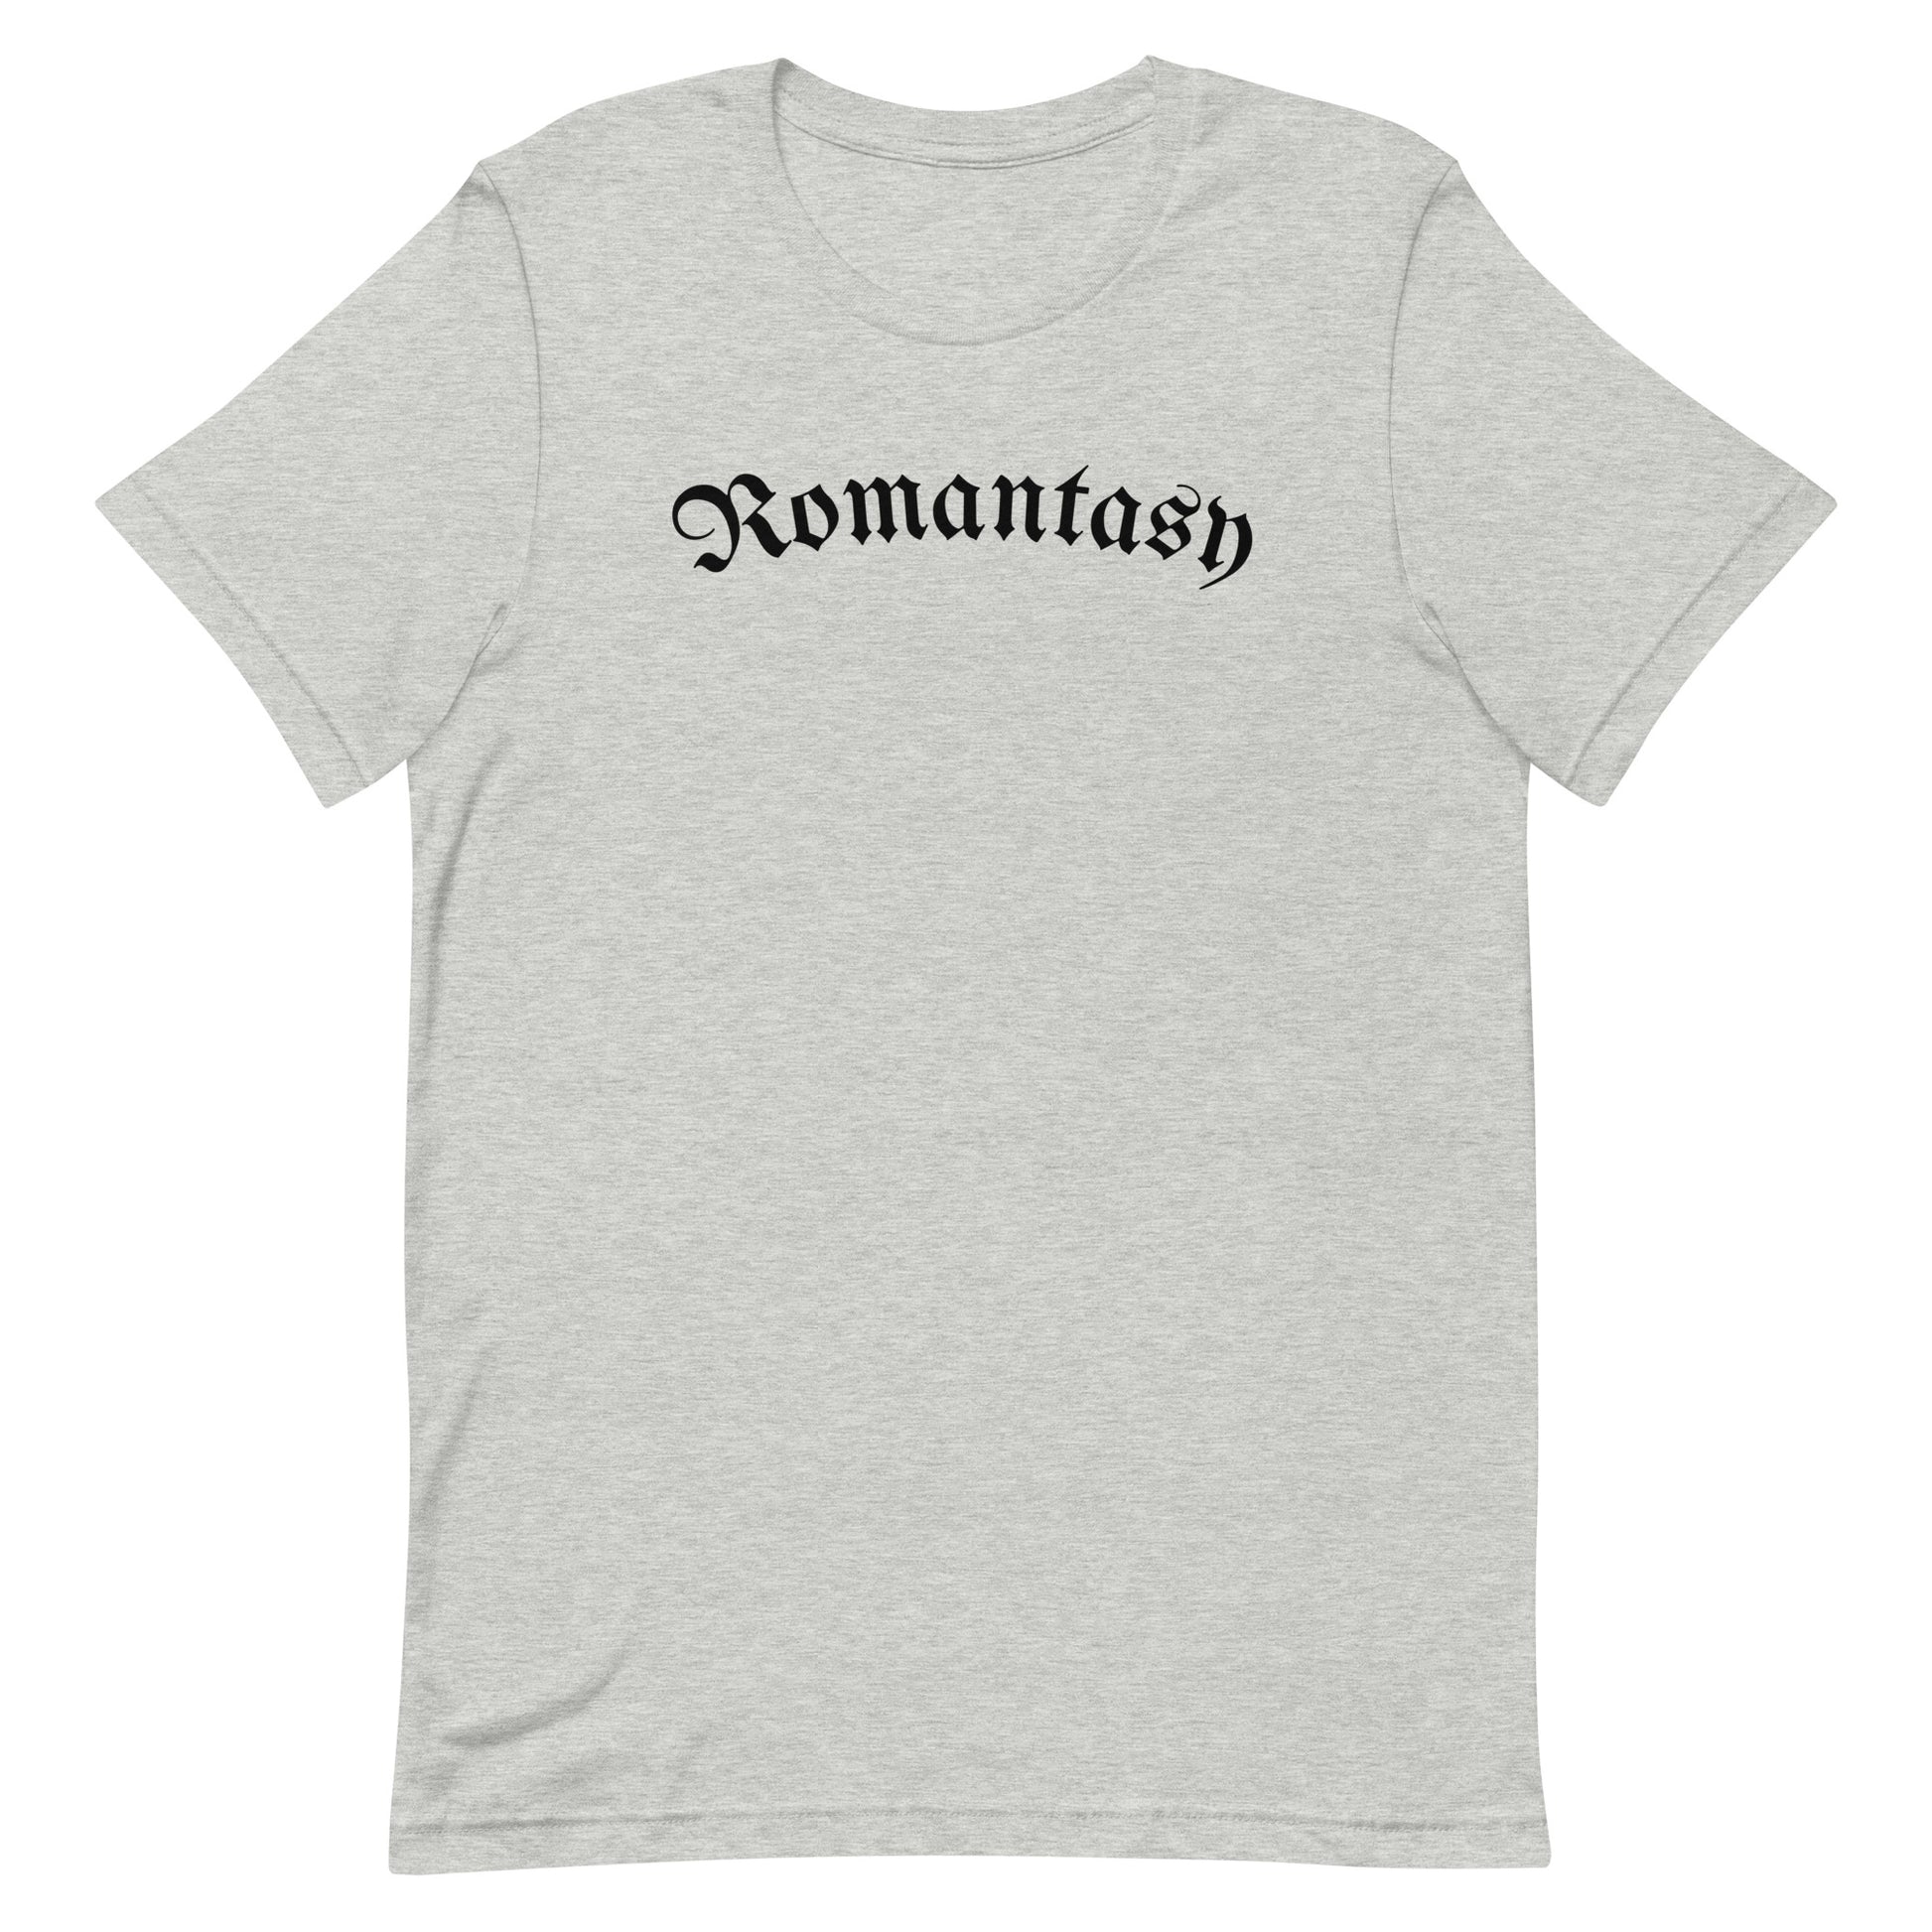 Front Side- Romantasy Romance Fantasy Book Tee T-shirt